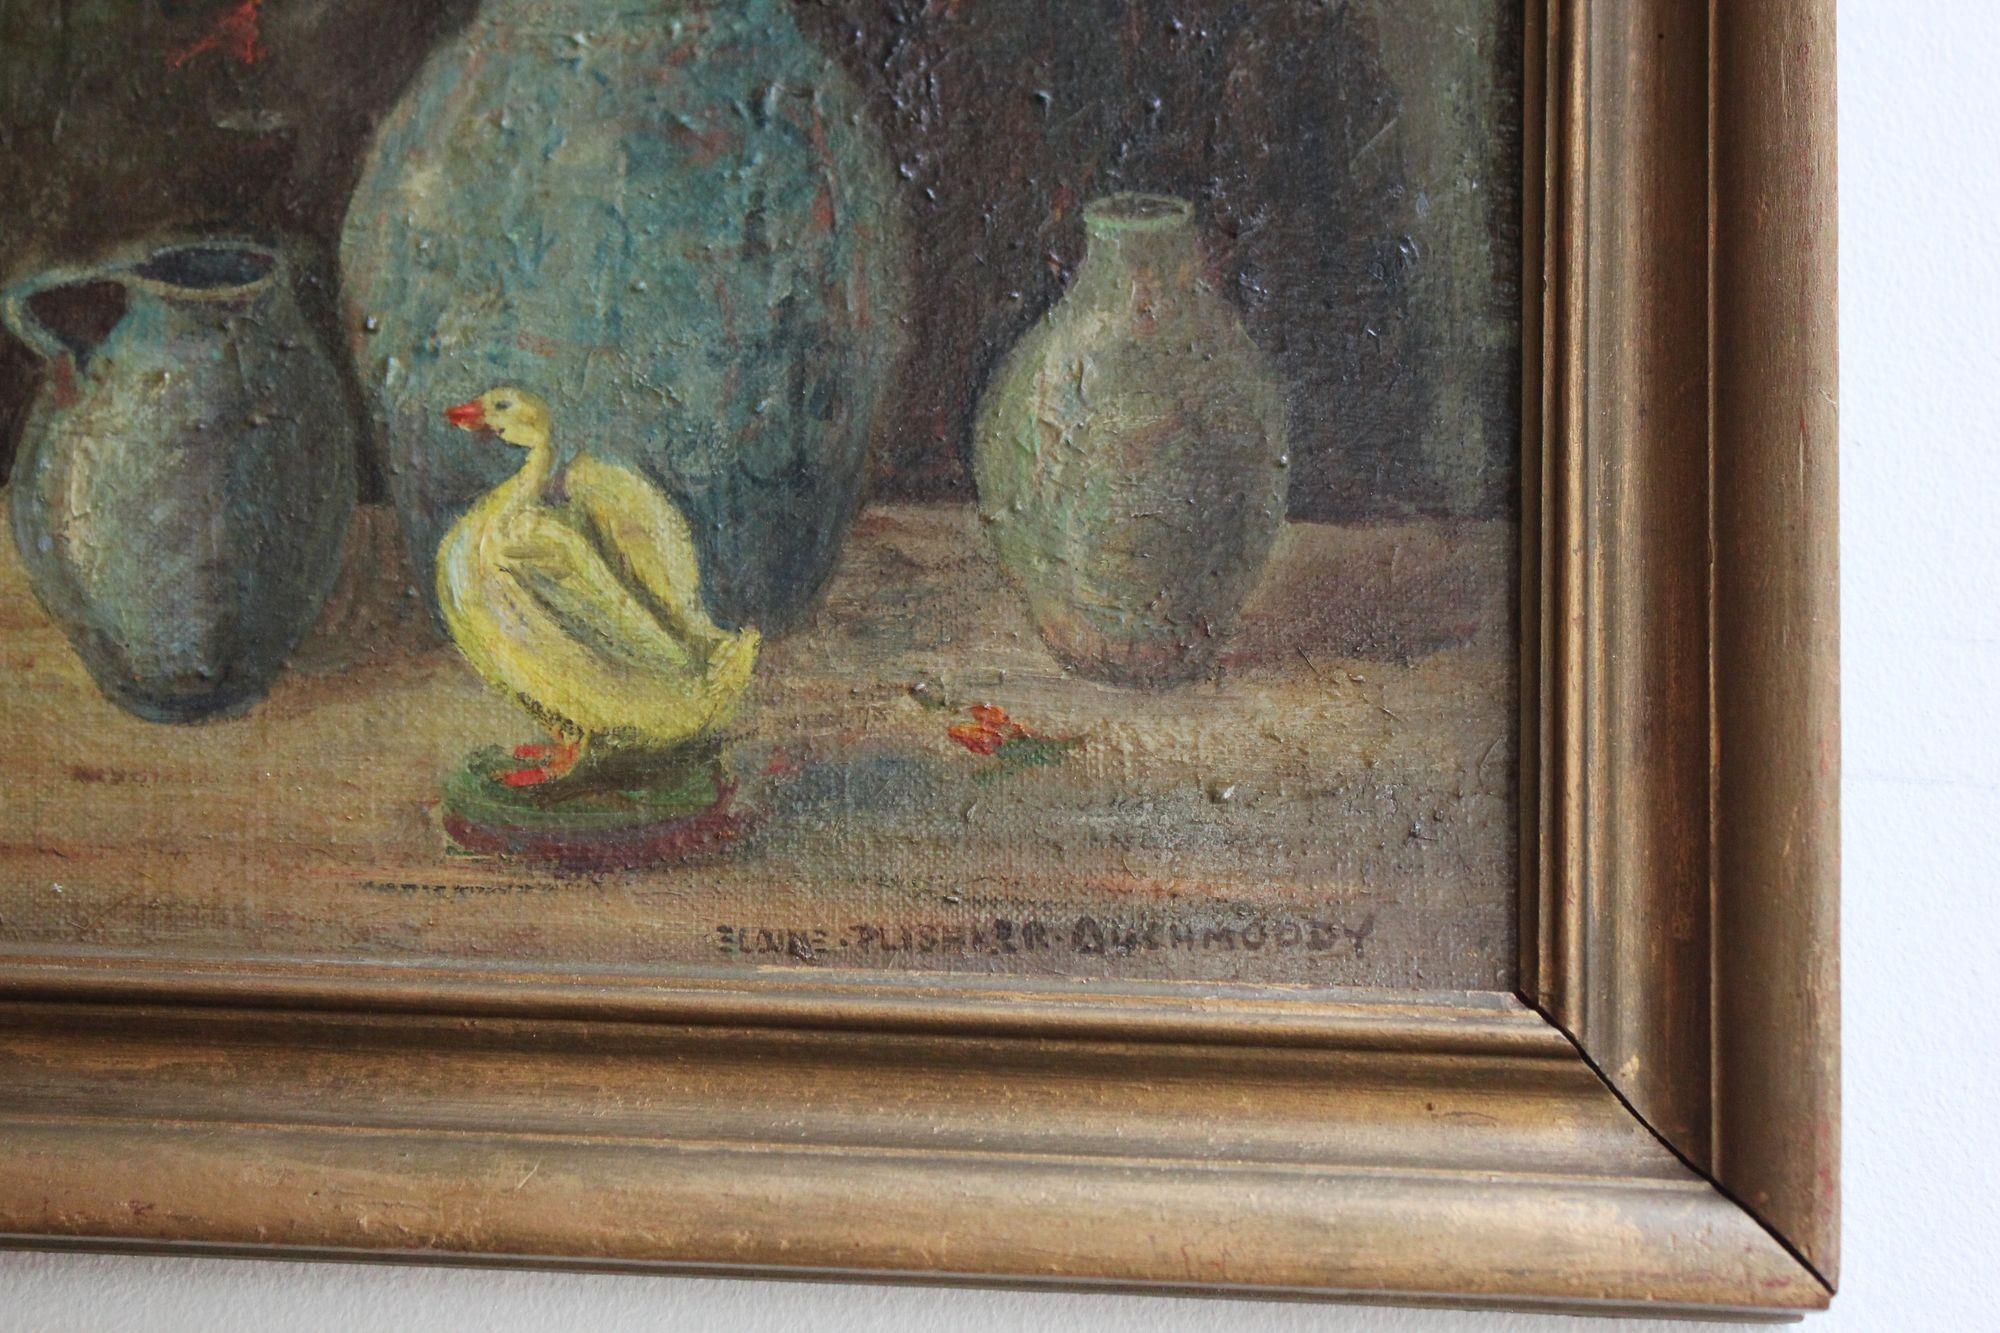 Wood Elaine Plishker Auchmoody Still Life with Duck Oil on Canvas For Sale